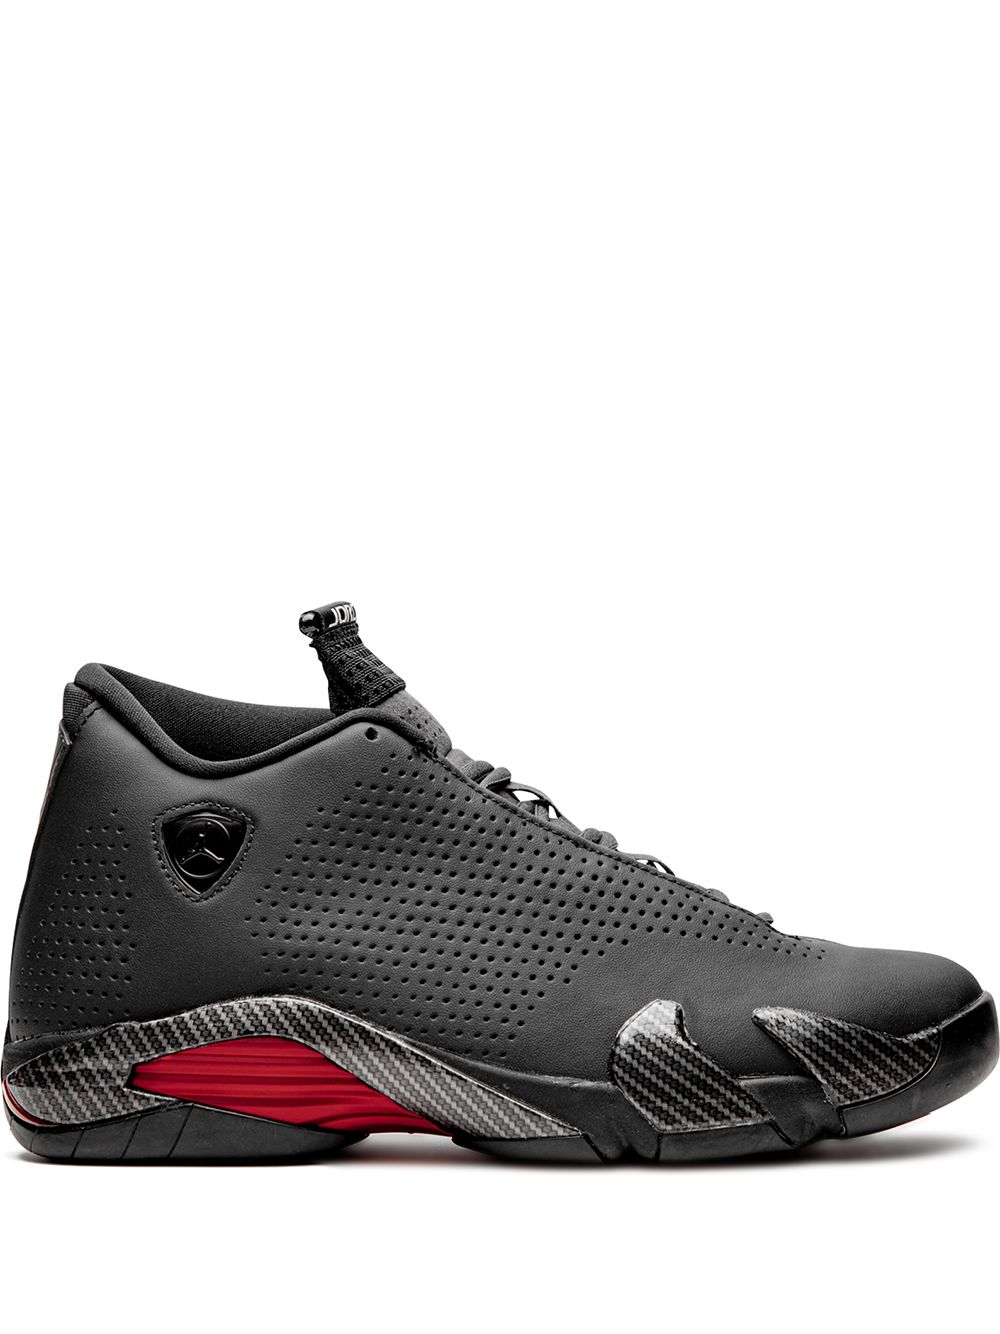 Jordan Air Jordan 14 "Black Ferrari" sneakers